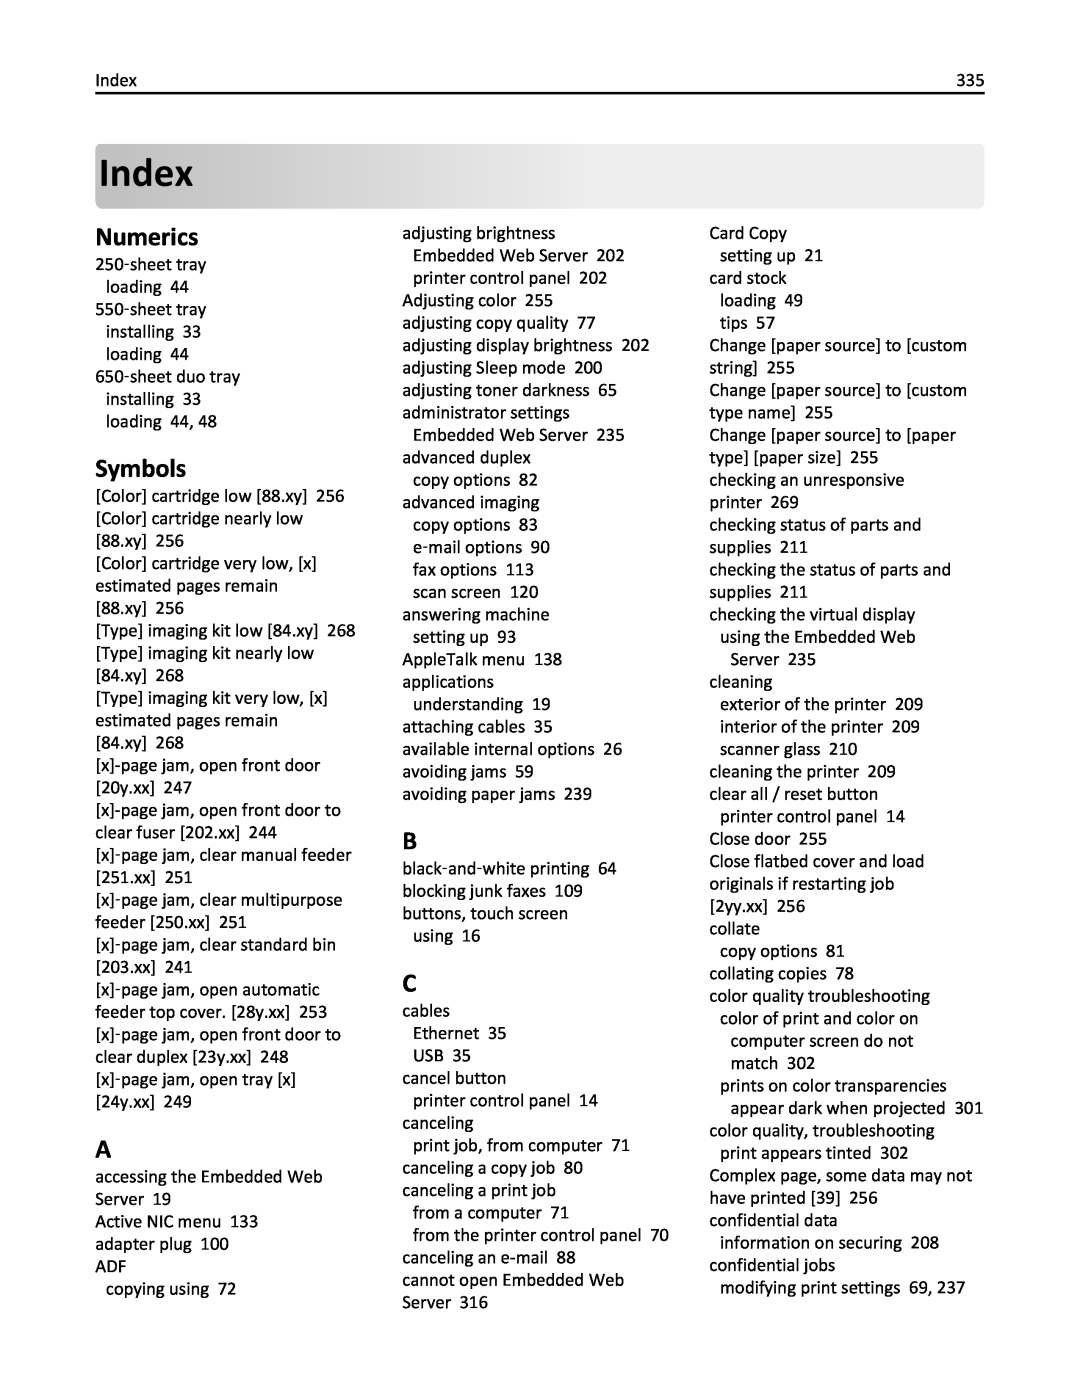 Lexmark 436 manual Index, Numerics, Symbols 